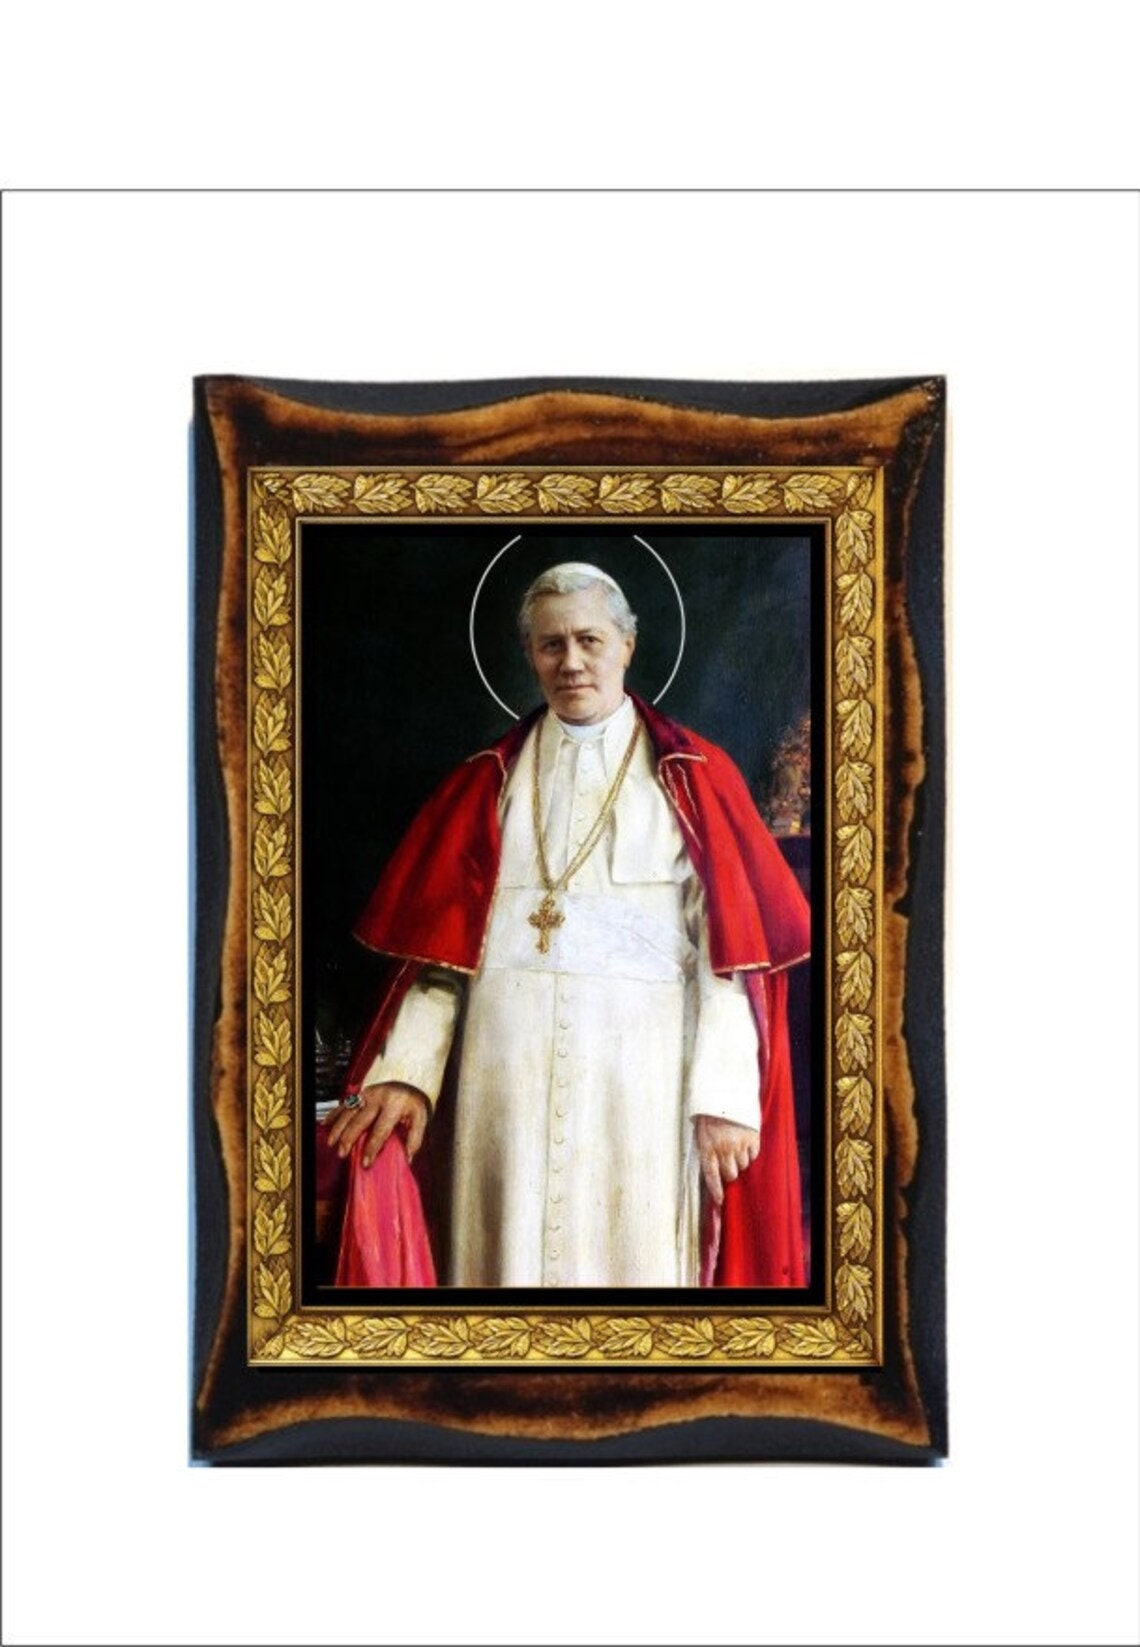 Pope St Pius X Traditional Latin Mass Catholic Saint T Shirt Printed Hat.  By Artistshot